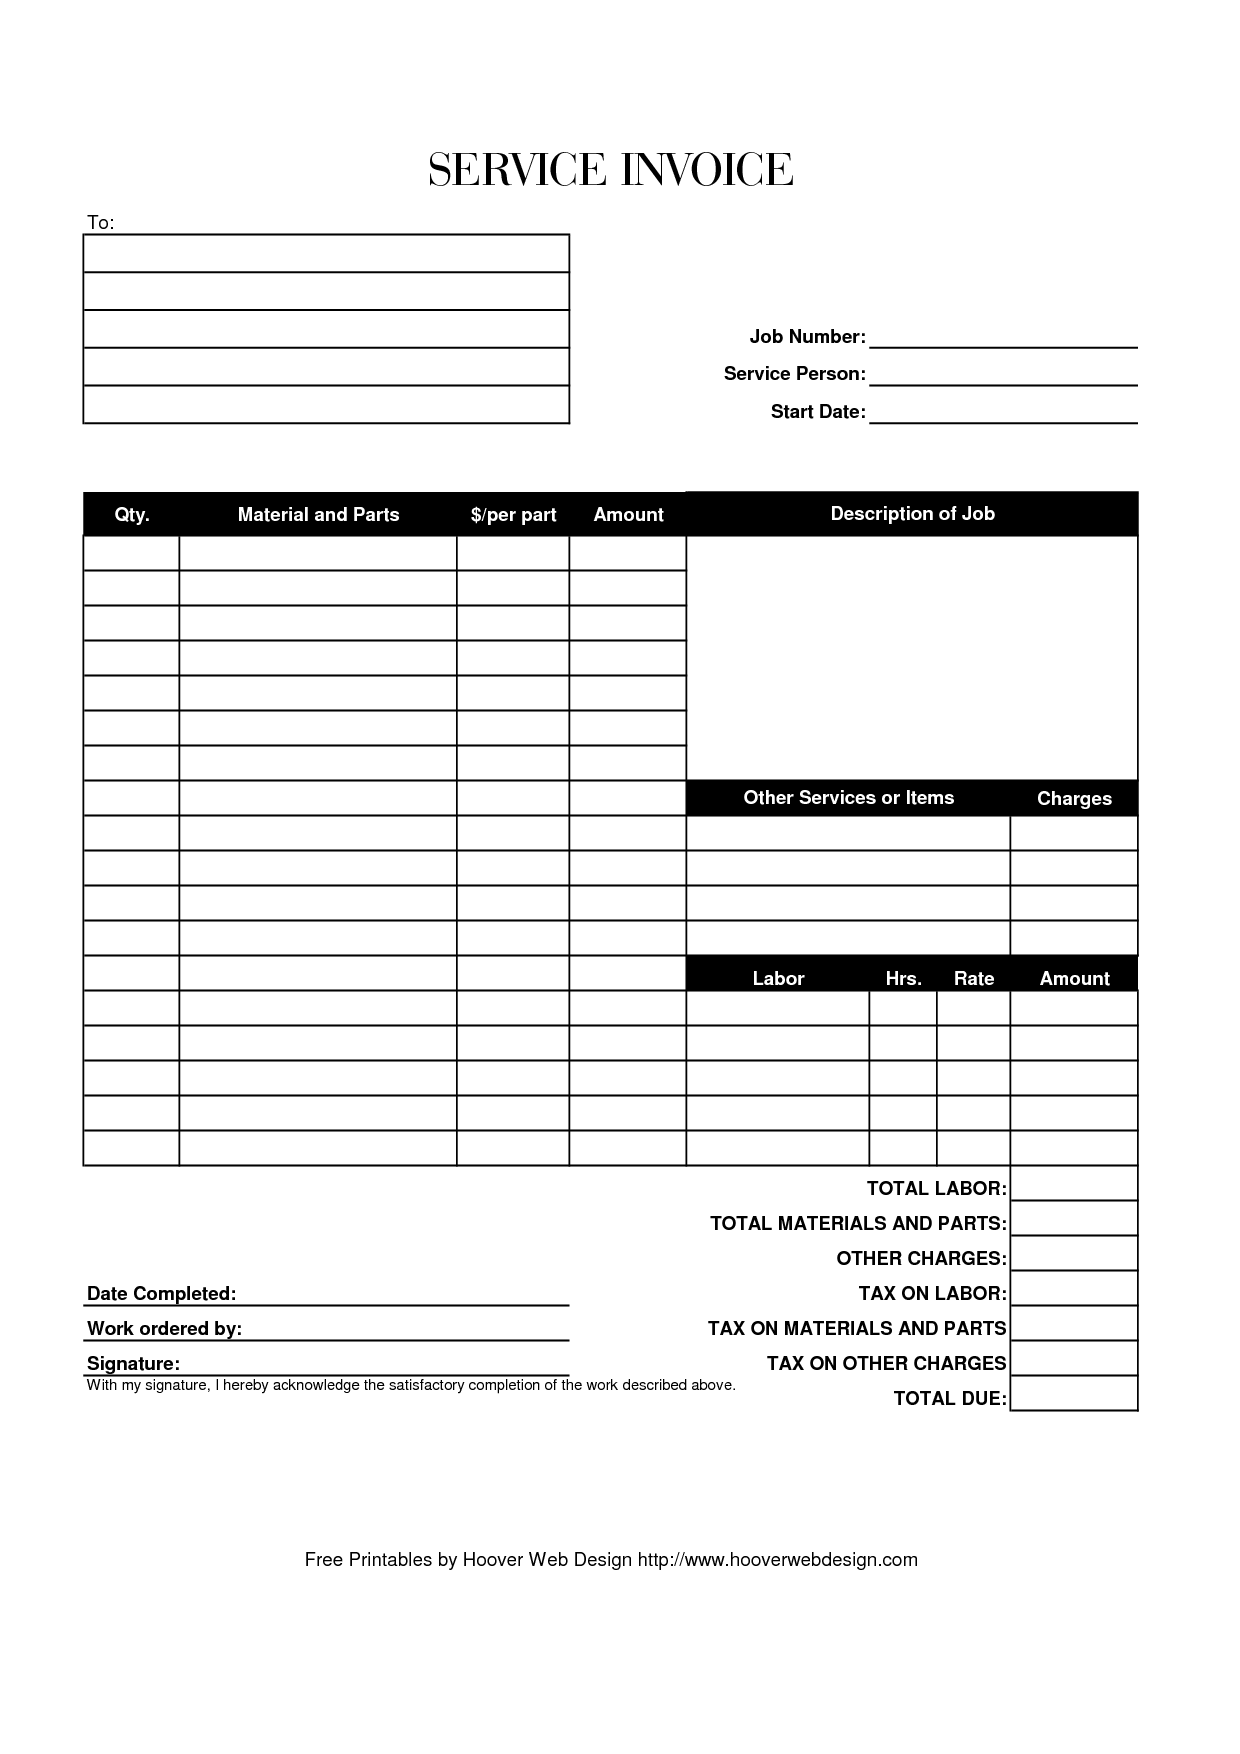 job-invoice-template-pdf-invoice-example